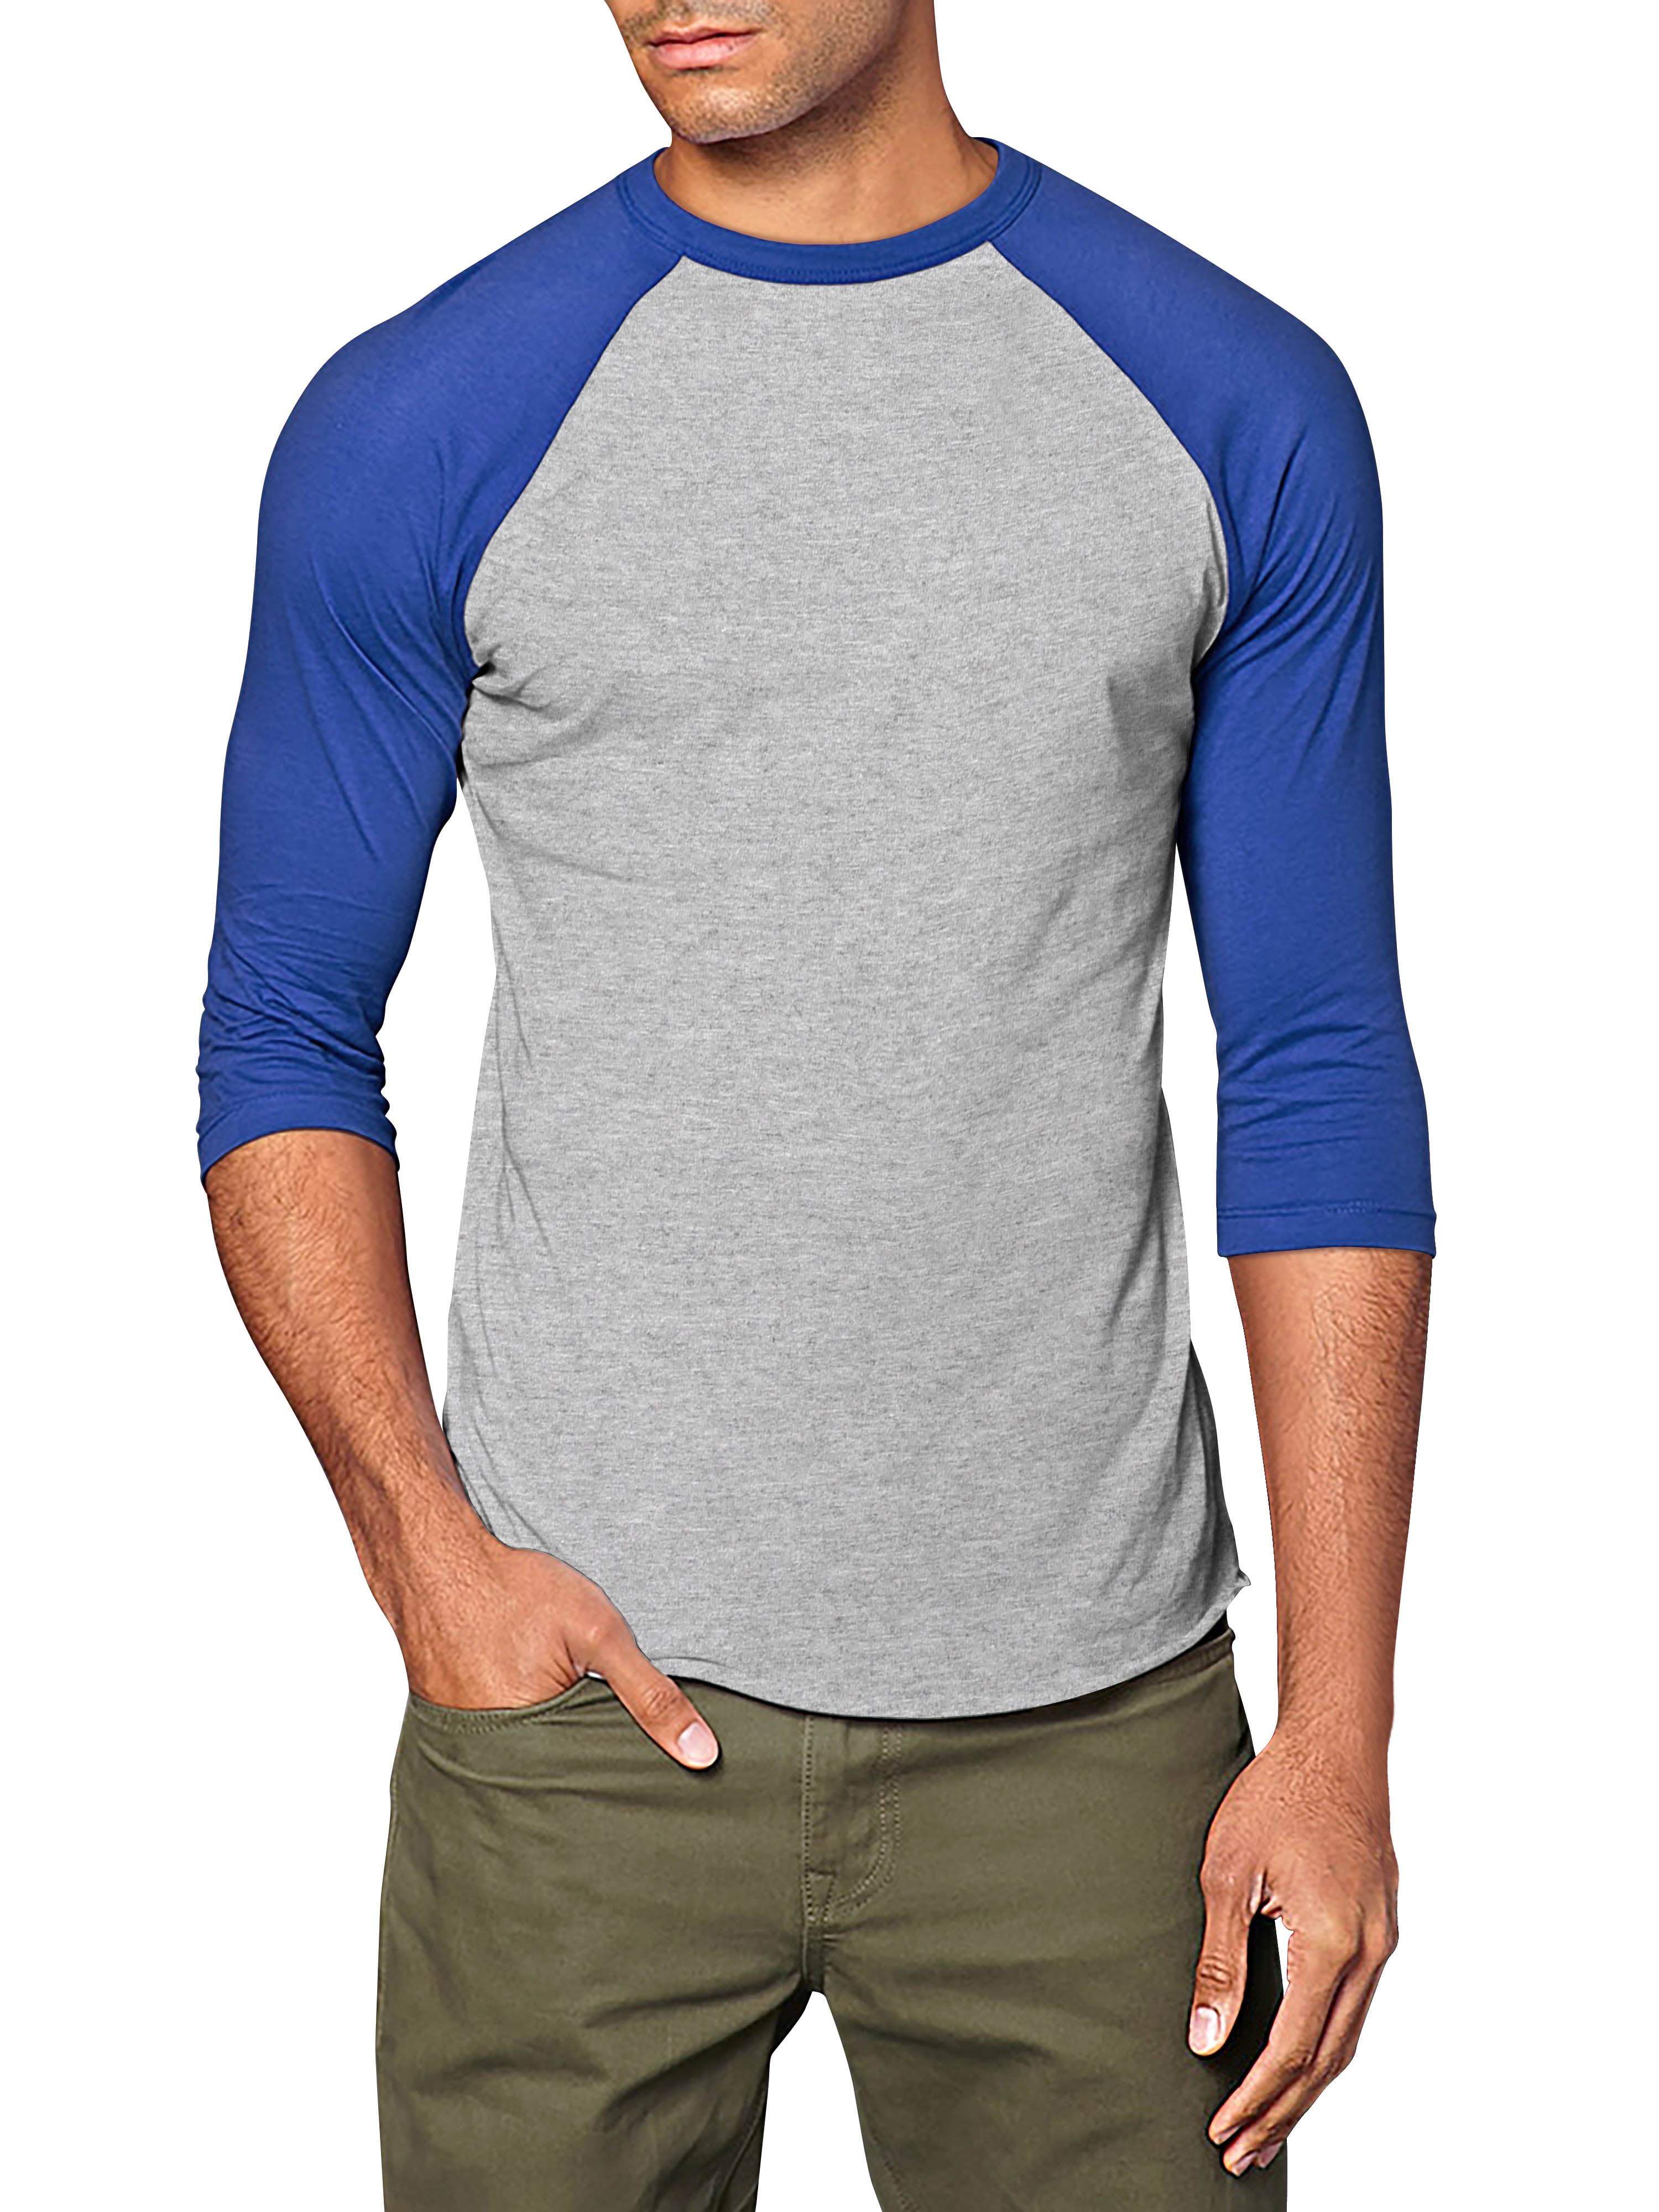 Mens 3/4 Sleeve Raglan Baseball T Shirt 